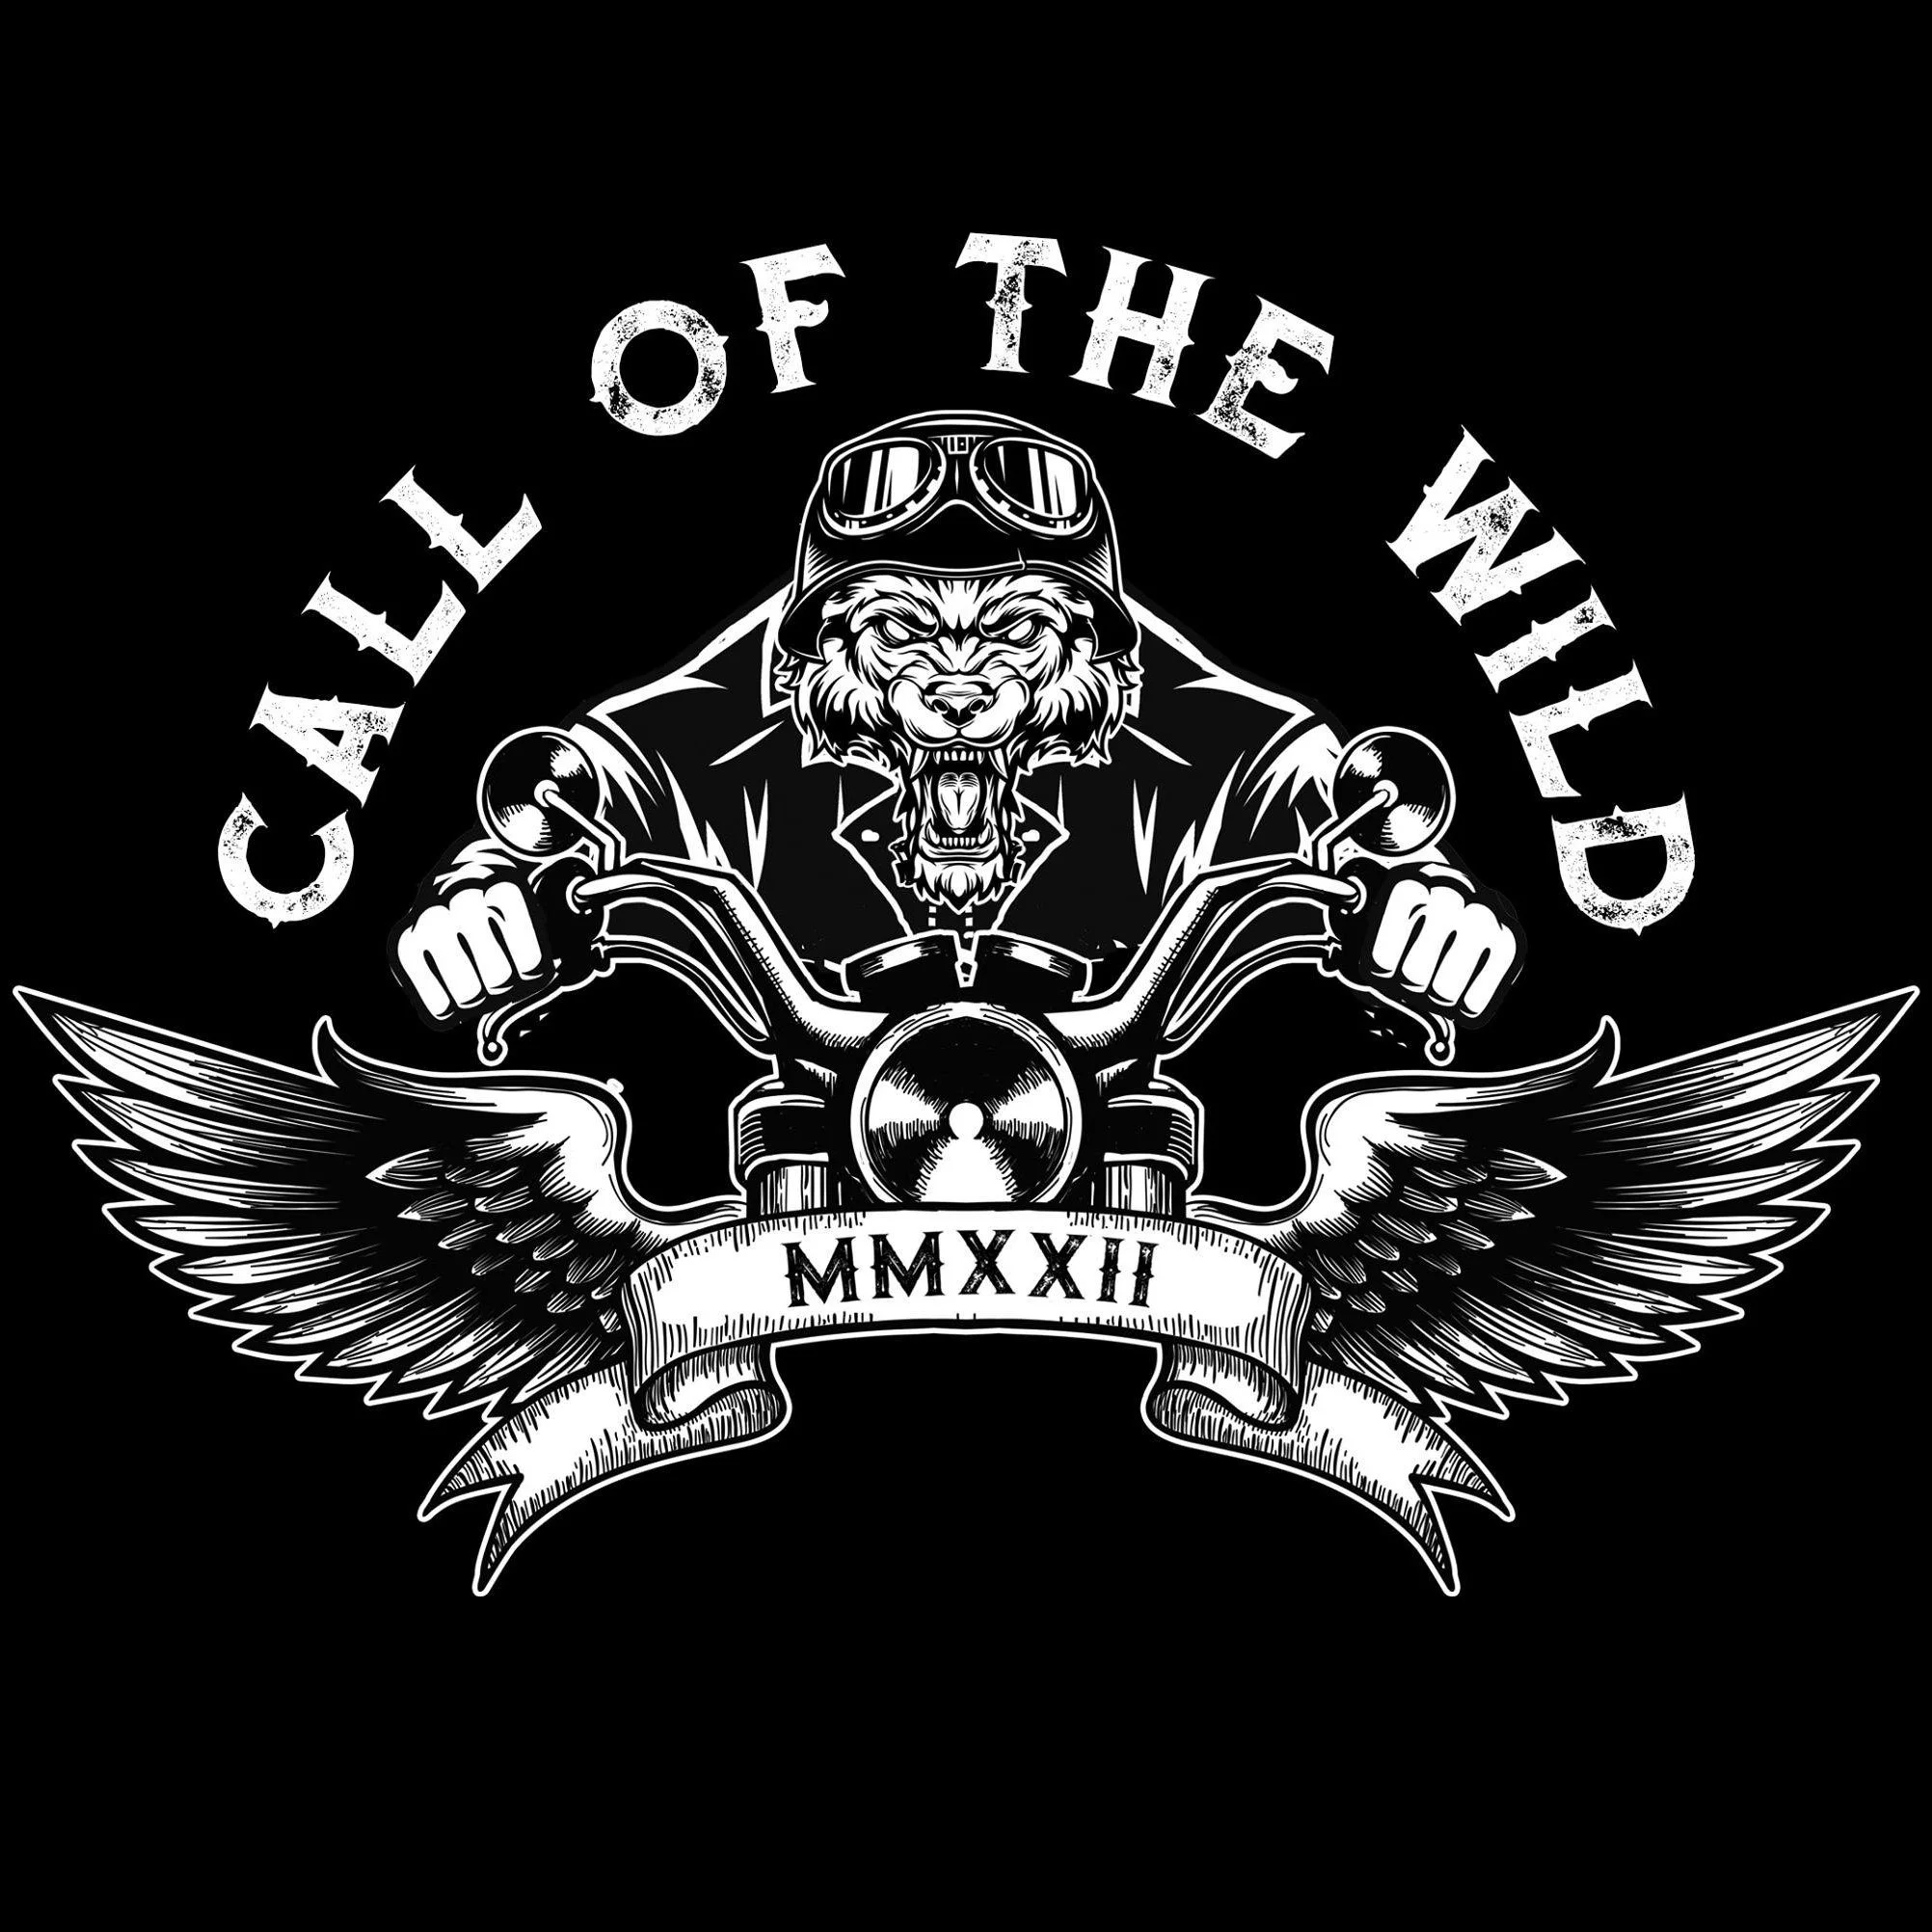 Call Of The Wild Festival logo